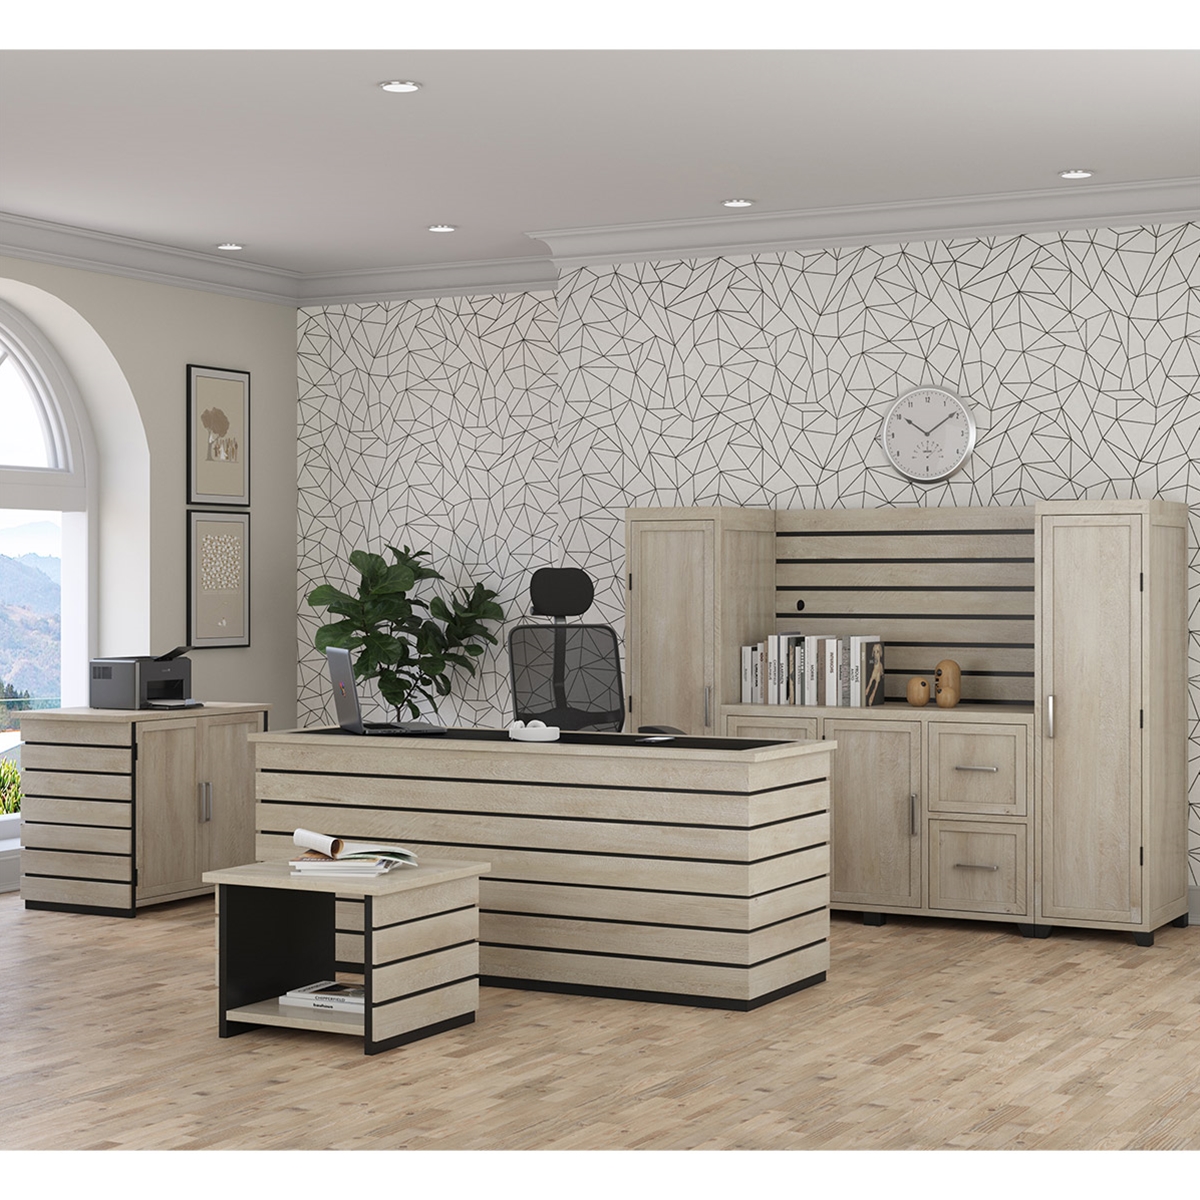 https://www.sierralivingconcepts.com/images/thumbs/0412141_leavenworth-solid-wood-rustic-modern-executive-office-furniture-set.jpeg